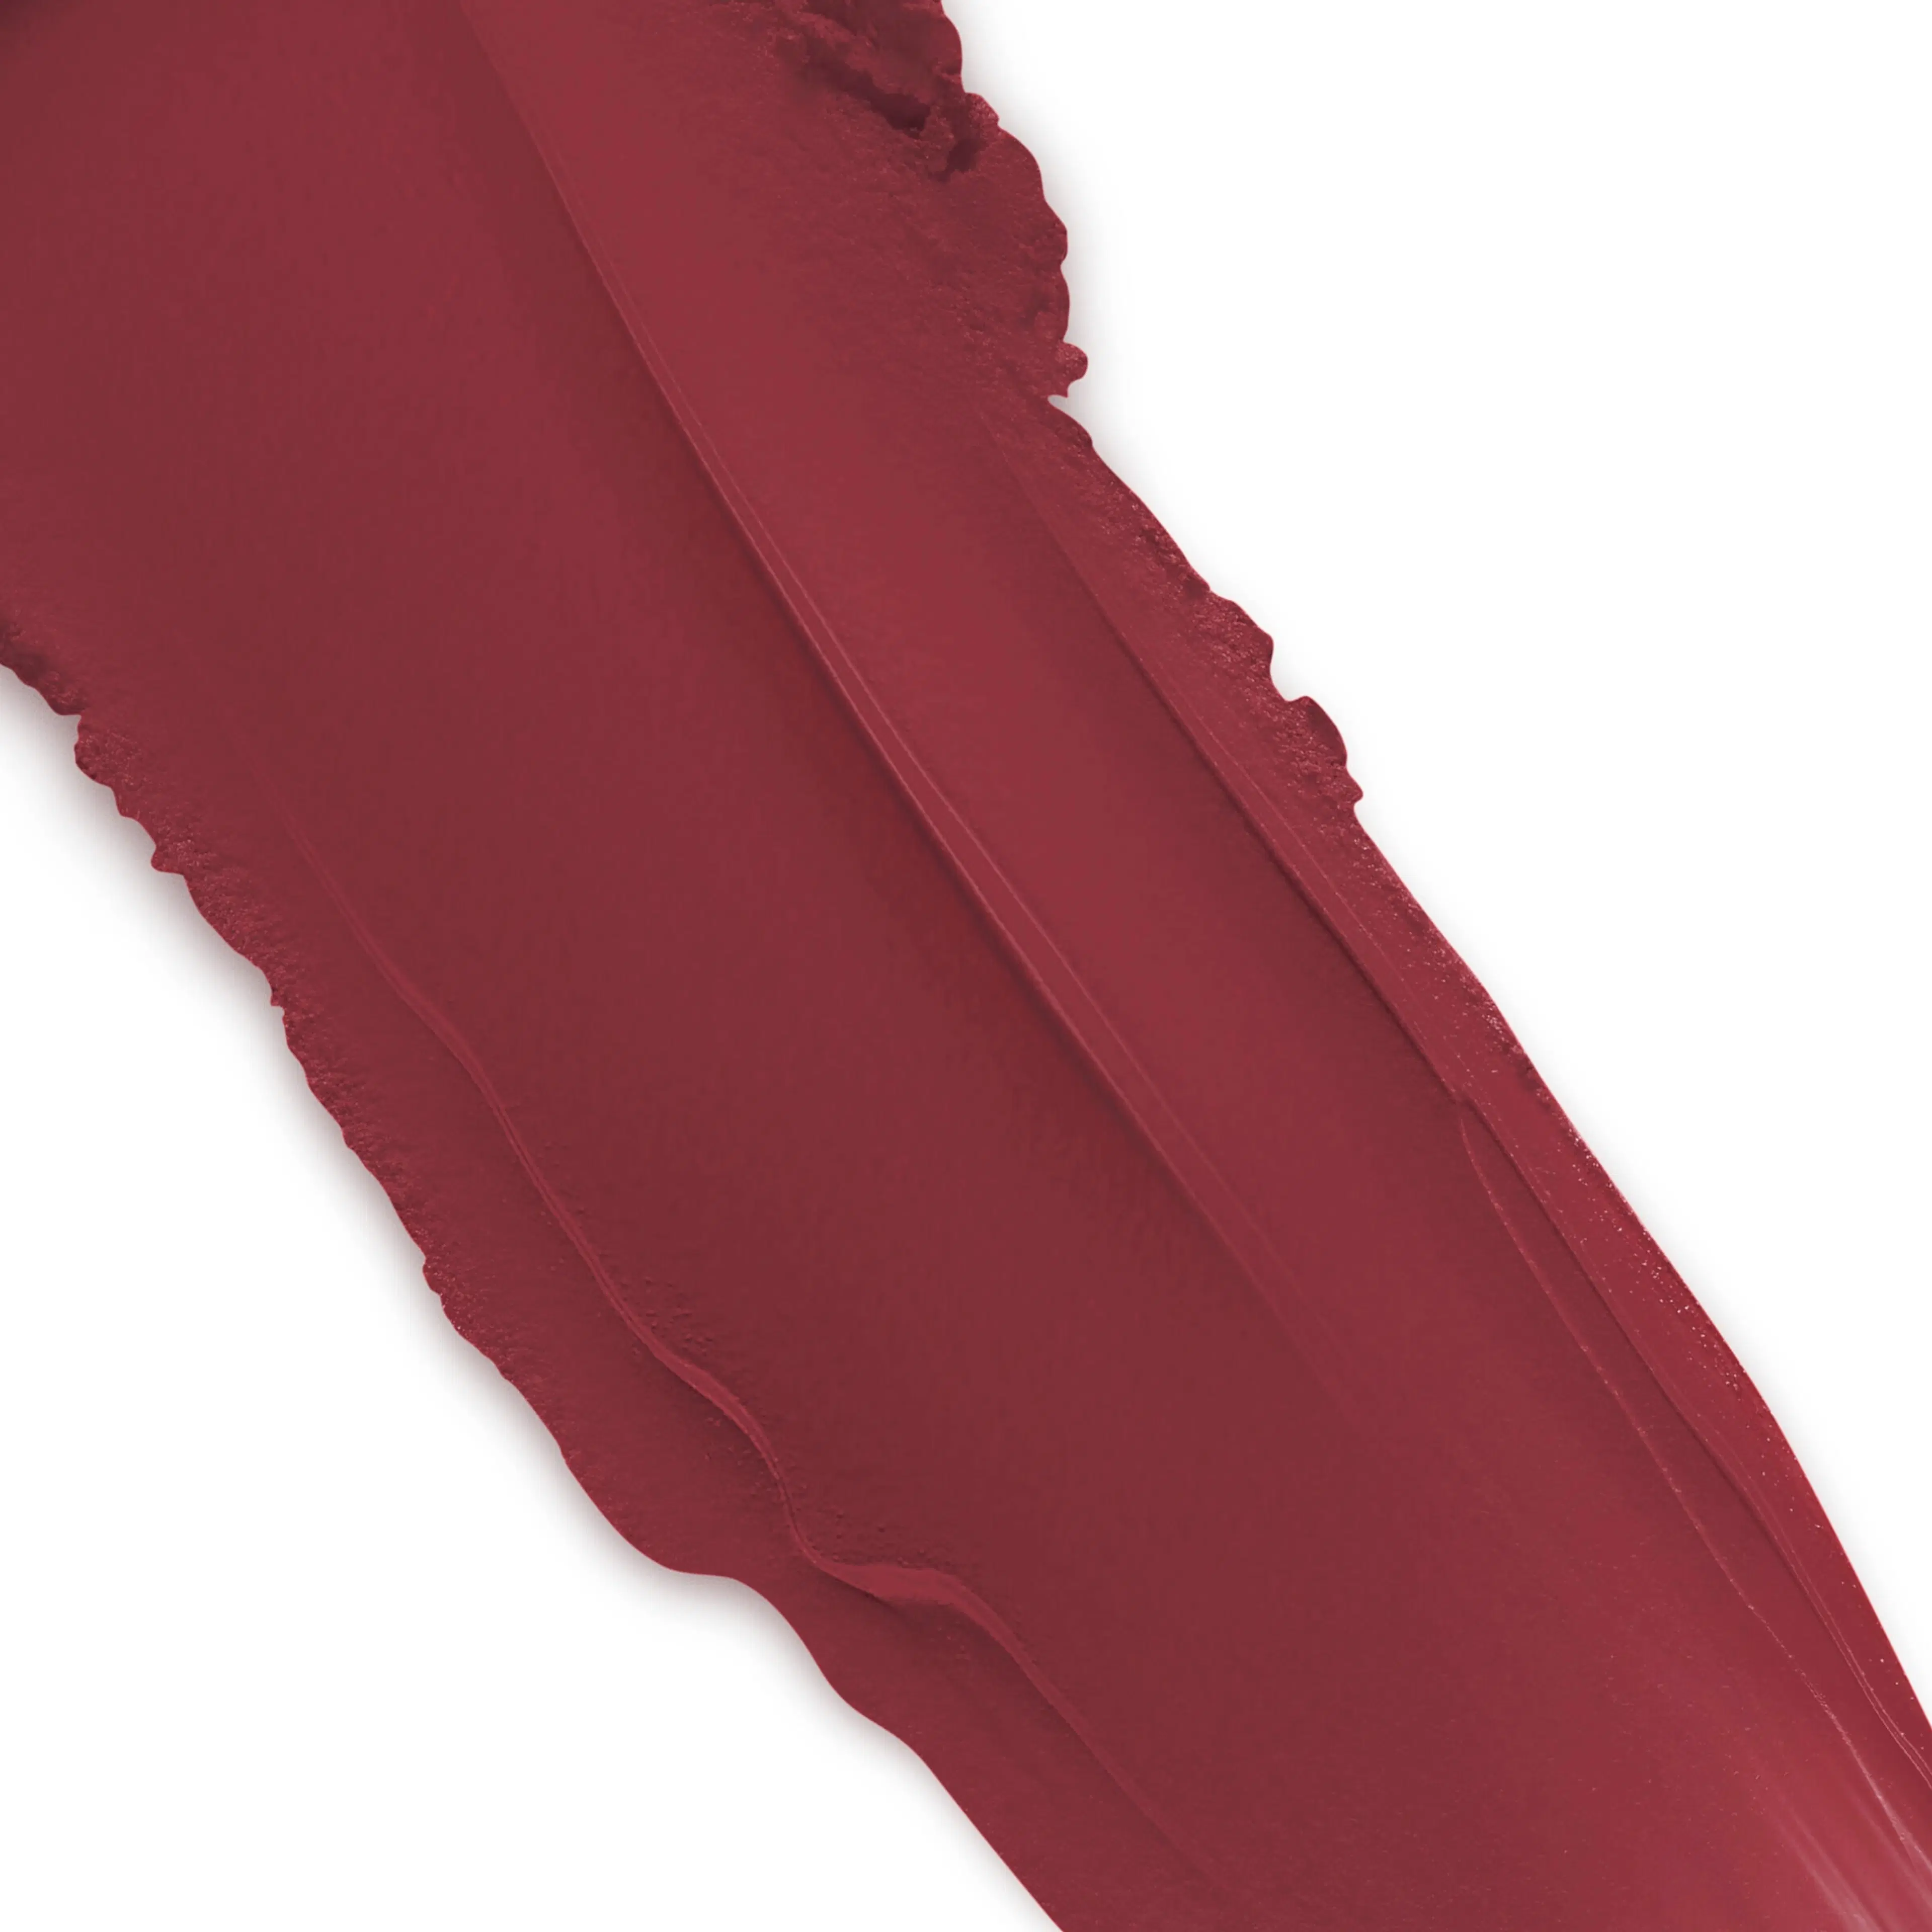 DIOR Rouge Dior Lipstick Velvet huulipuna 3,5 g